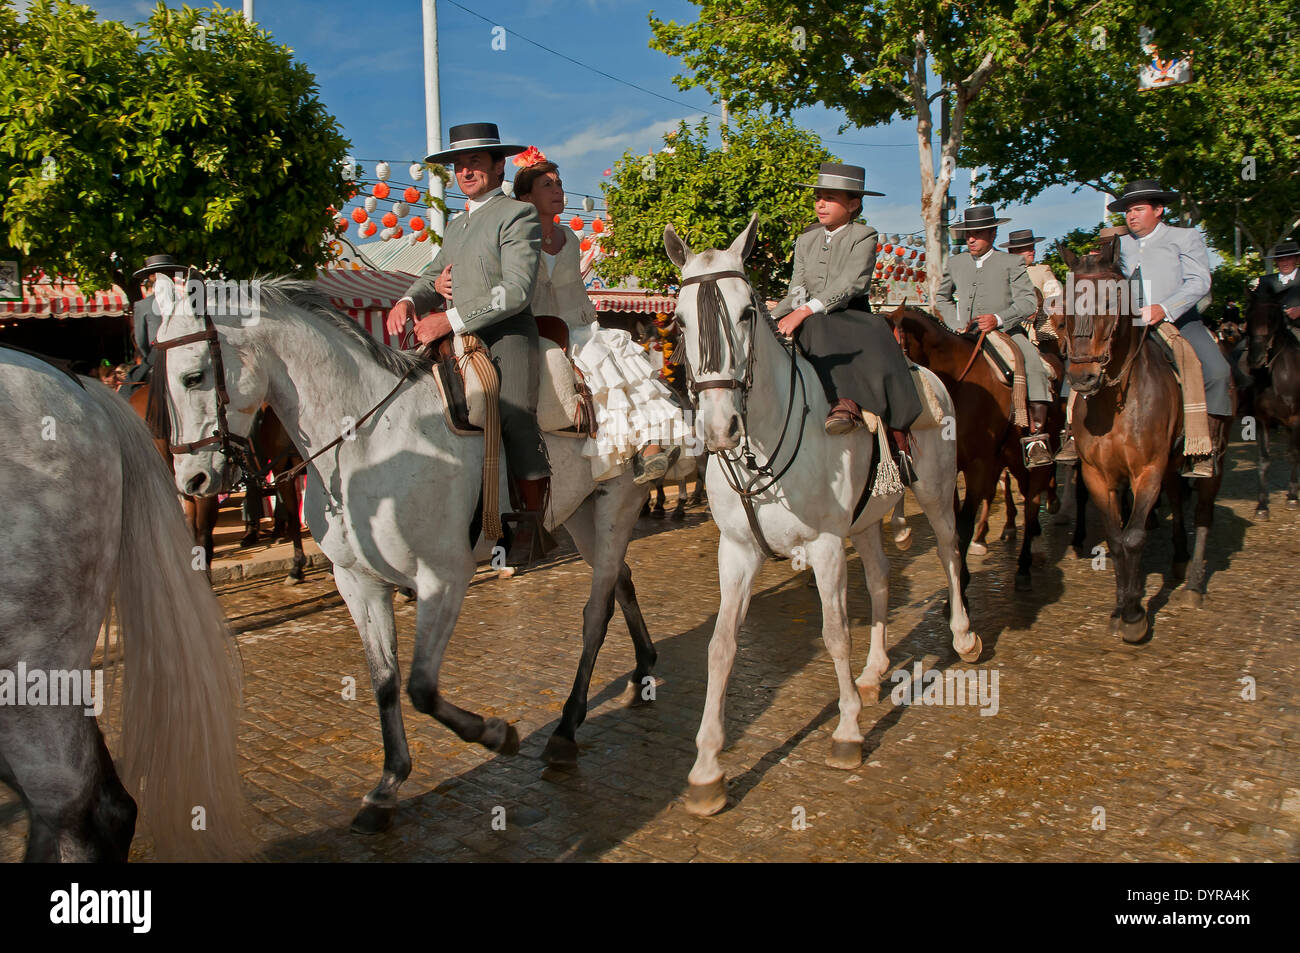 Feria de Abril, jinetes montando a caballo con los tradicionales trajes de flamenca, Sevilla. Región de Andalucía, España, Europa Foto de stock